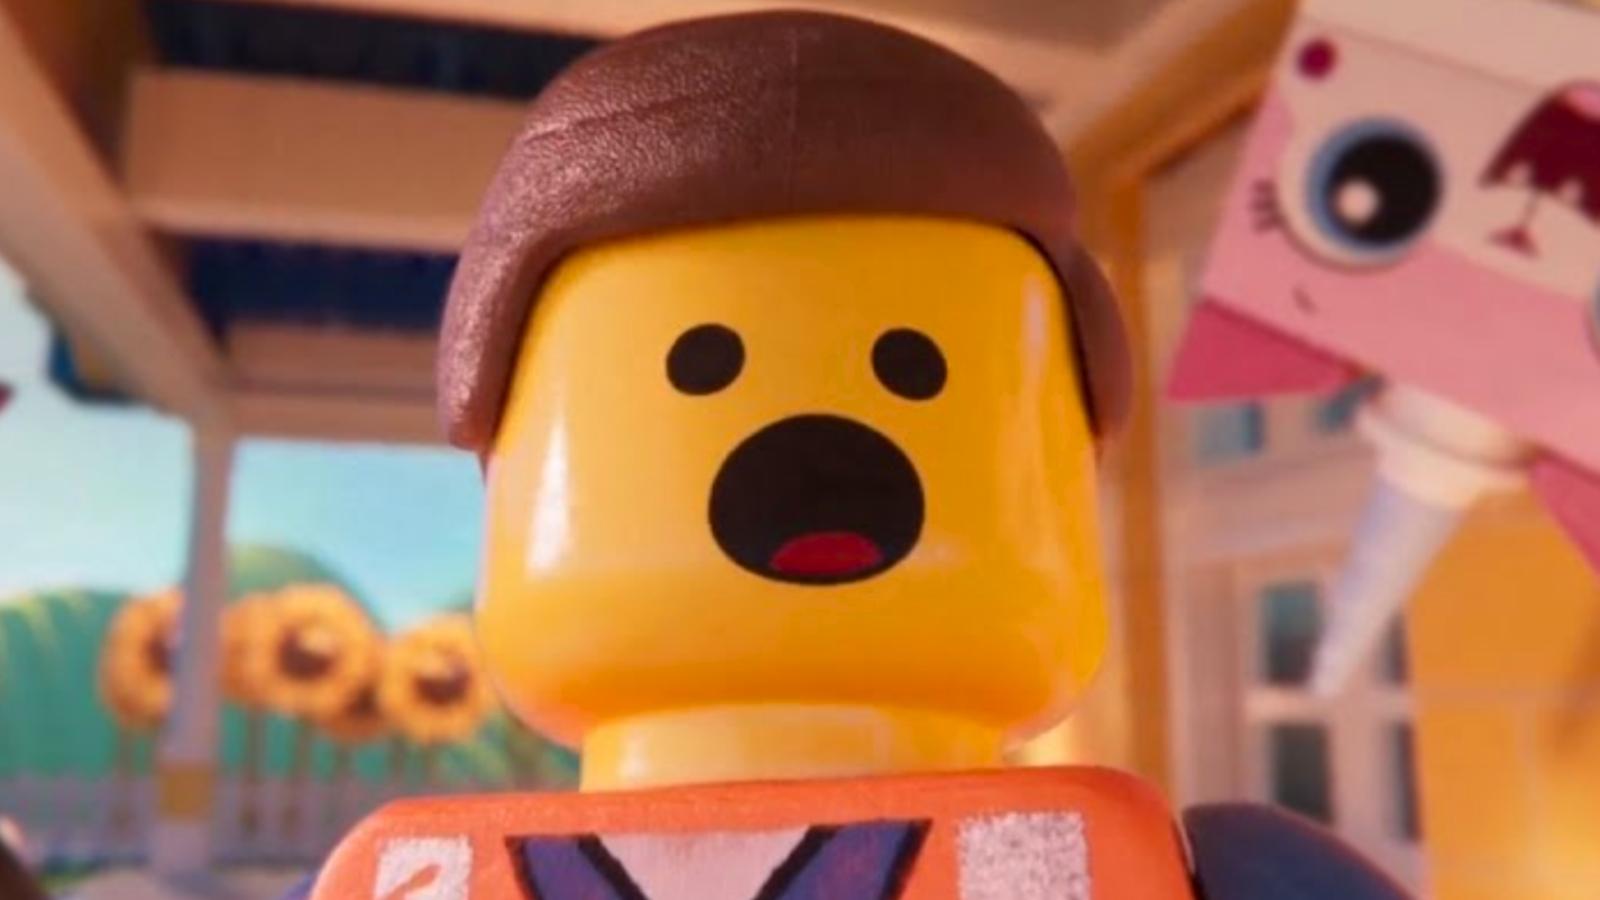 LEGO character shocked.